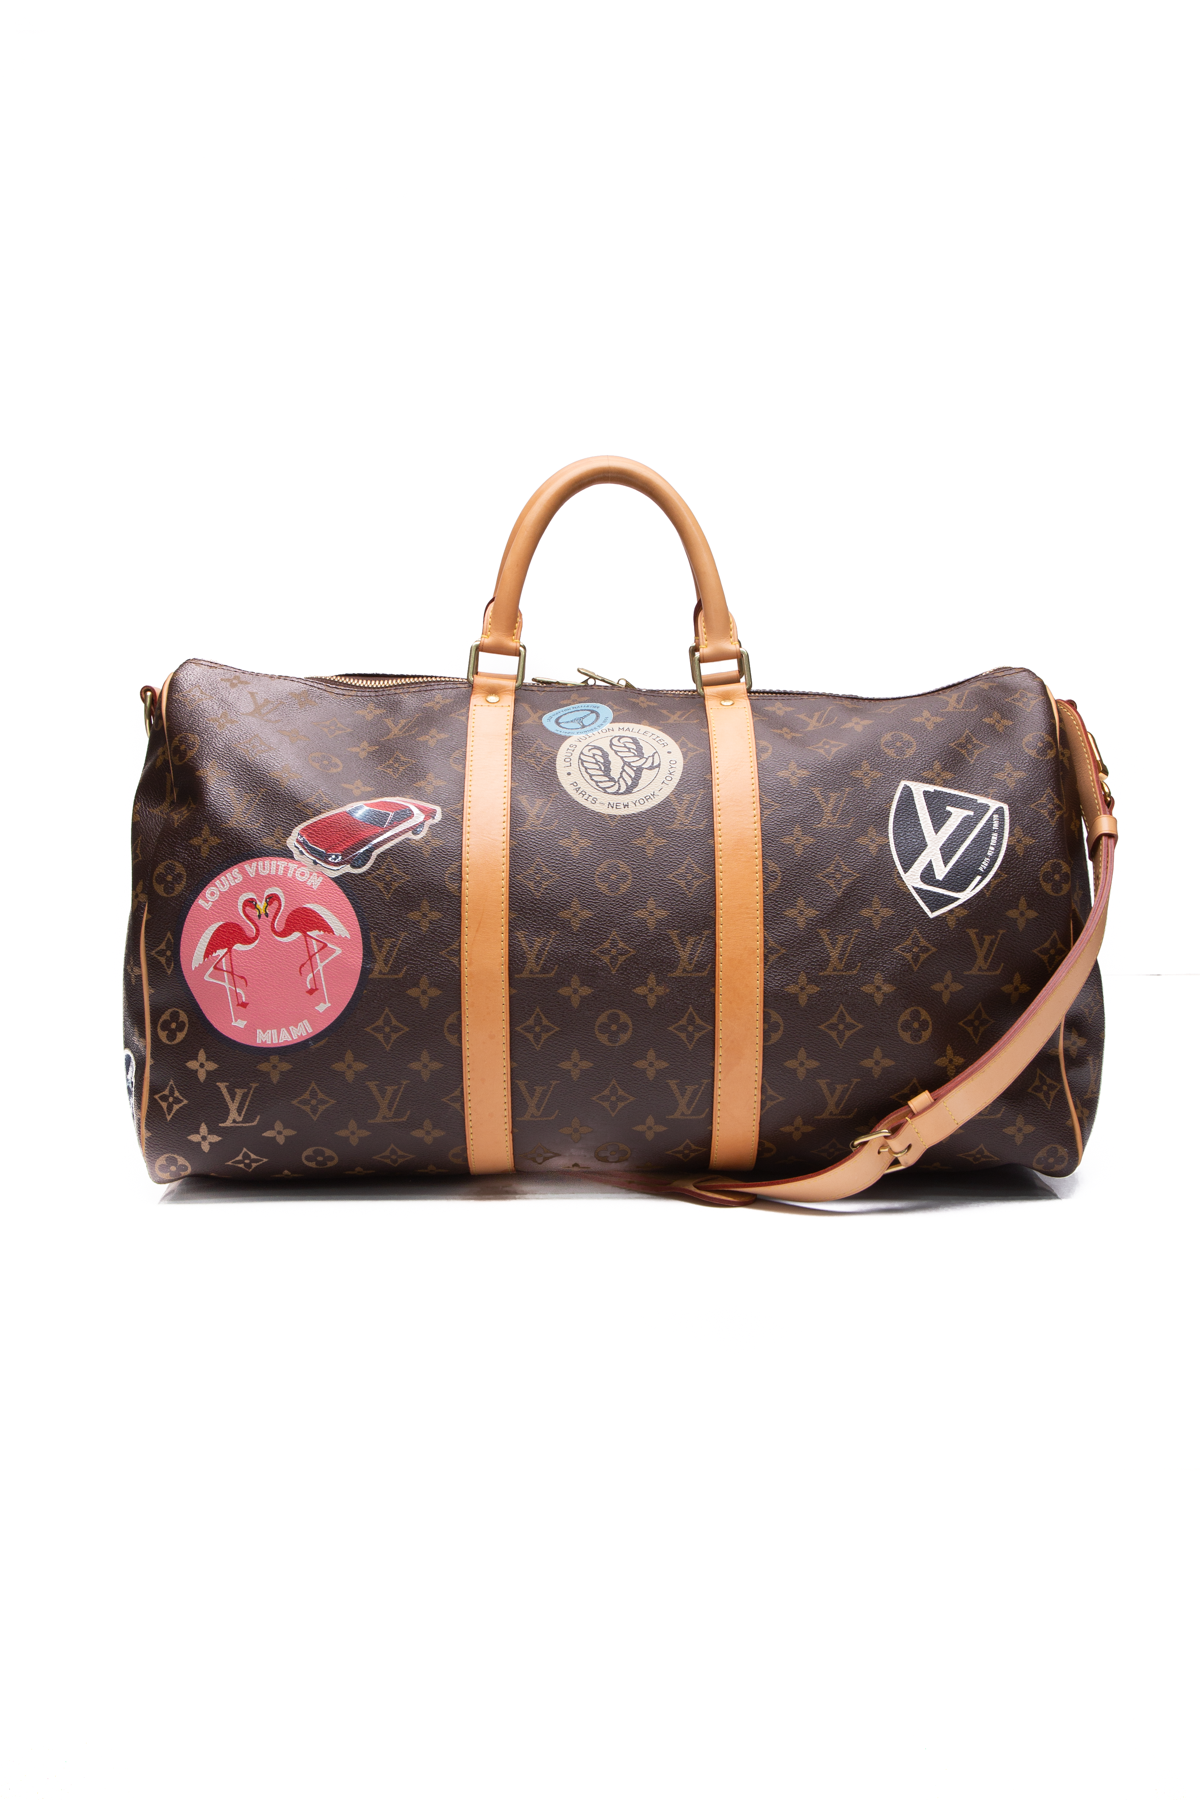 Louis Vuitton Keepall 50 Monogram Canvas Bandouliere Travel Bag LV